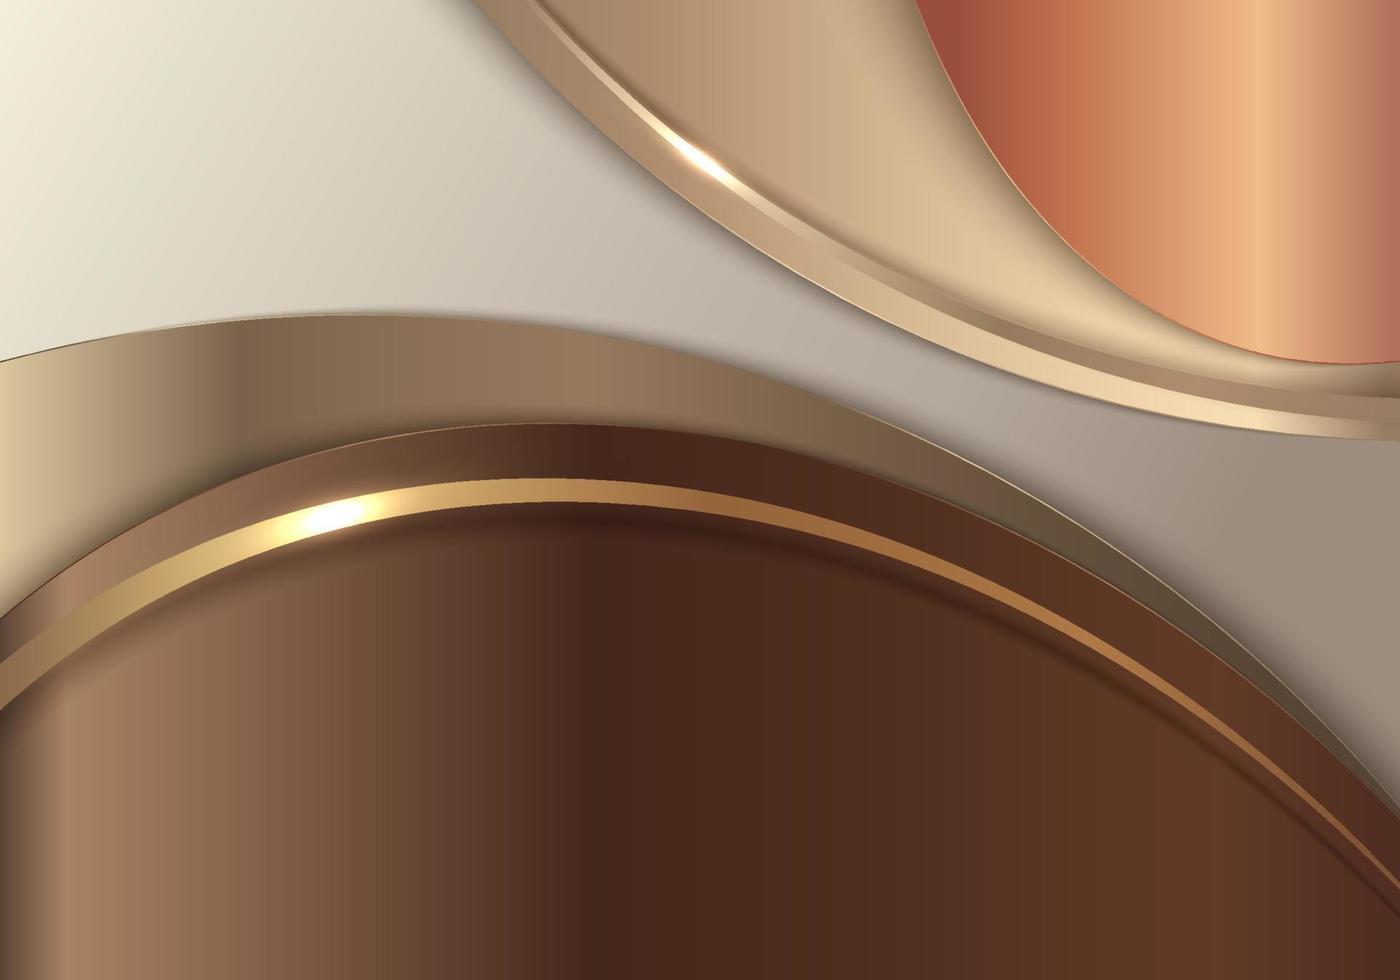 formas curvas metálicas douradas elegantes abstratas sobrepostas no estilo de luxo de fundo prateado vetor